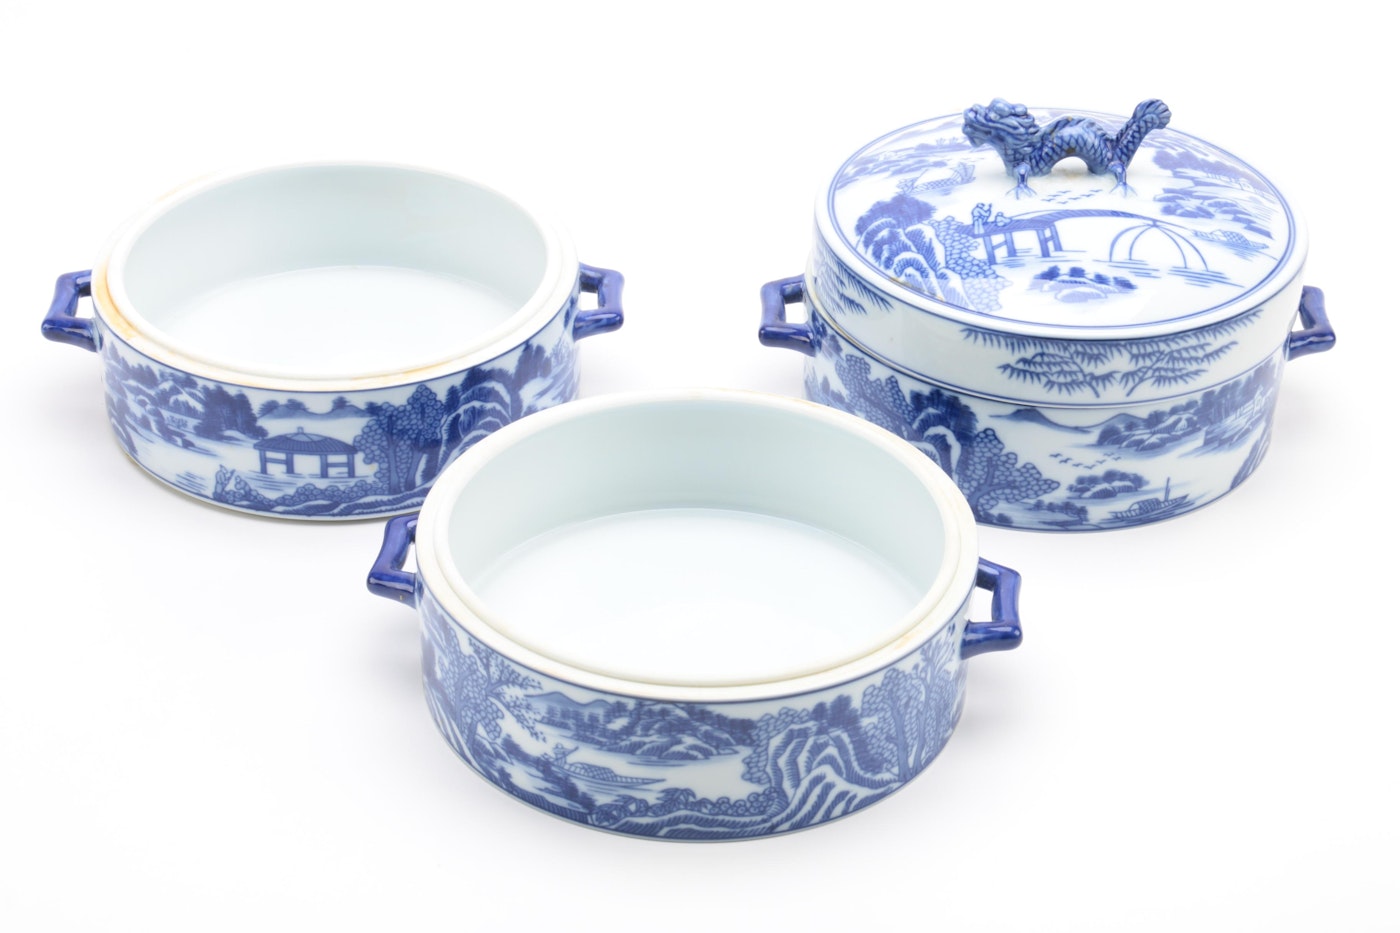 Blue and White Patterned Vessels Including Ringtons Tea Merchants Jar | EBTH